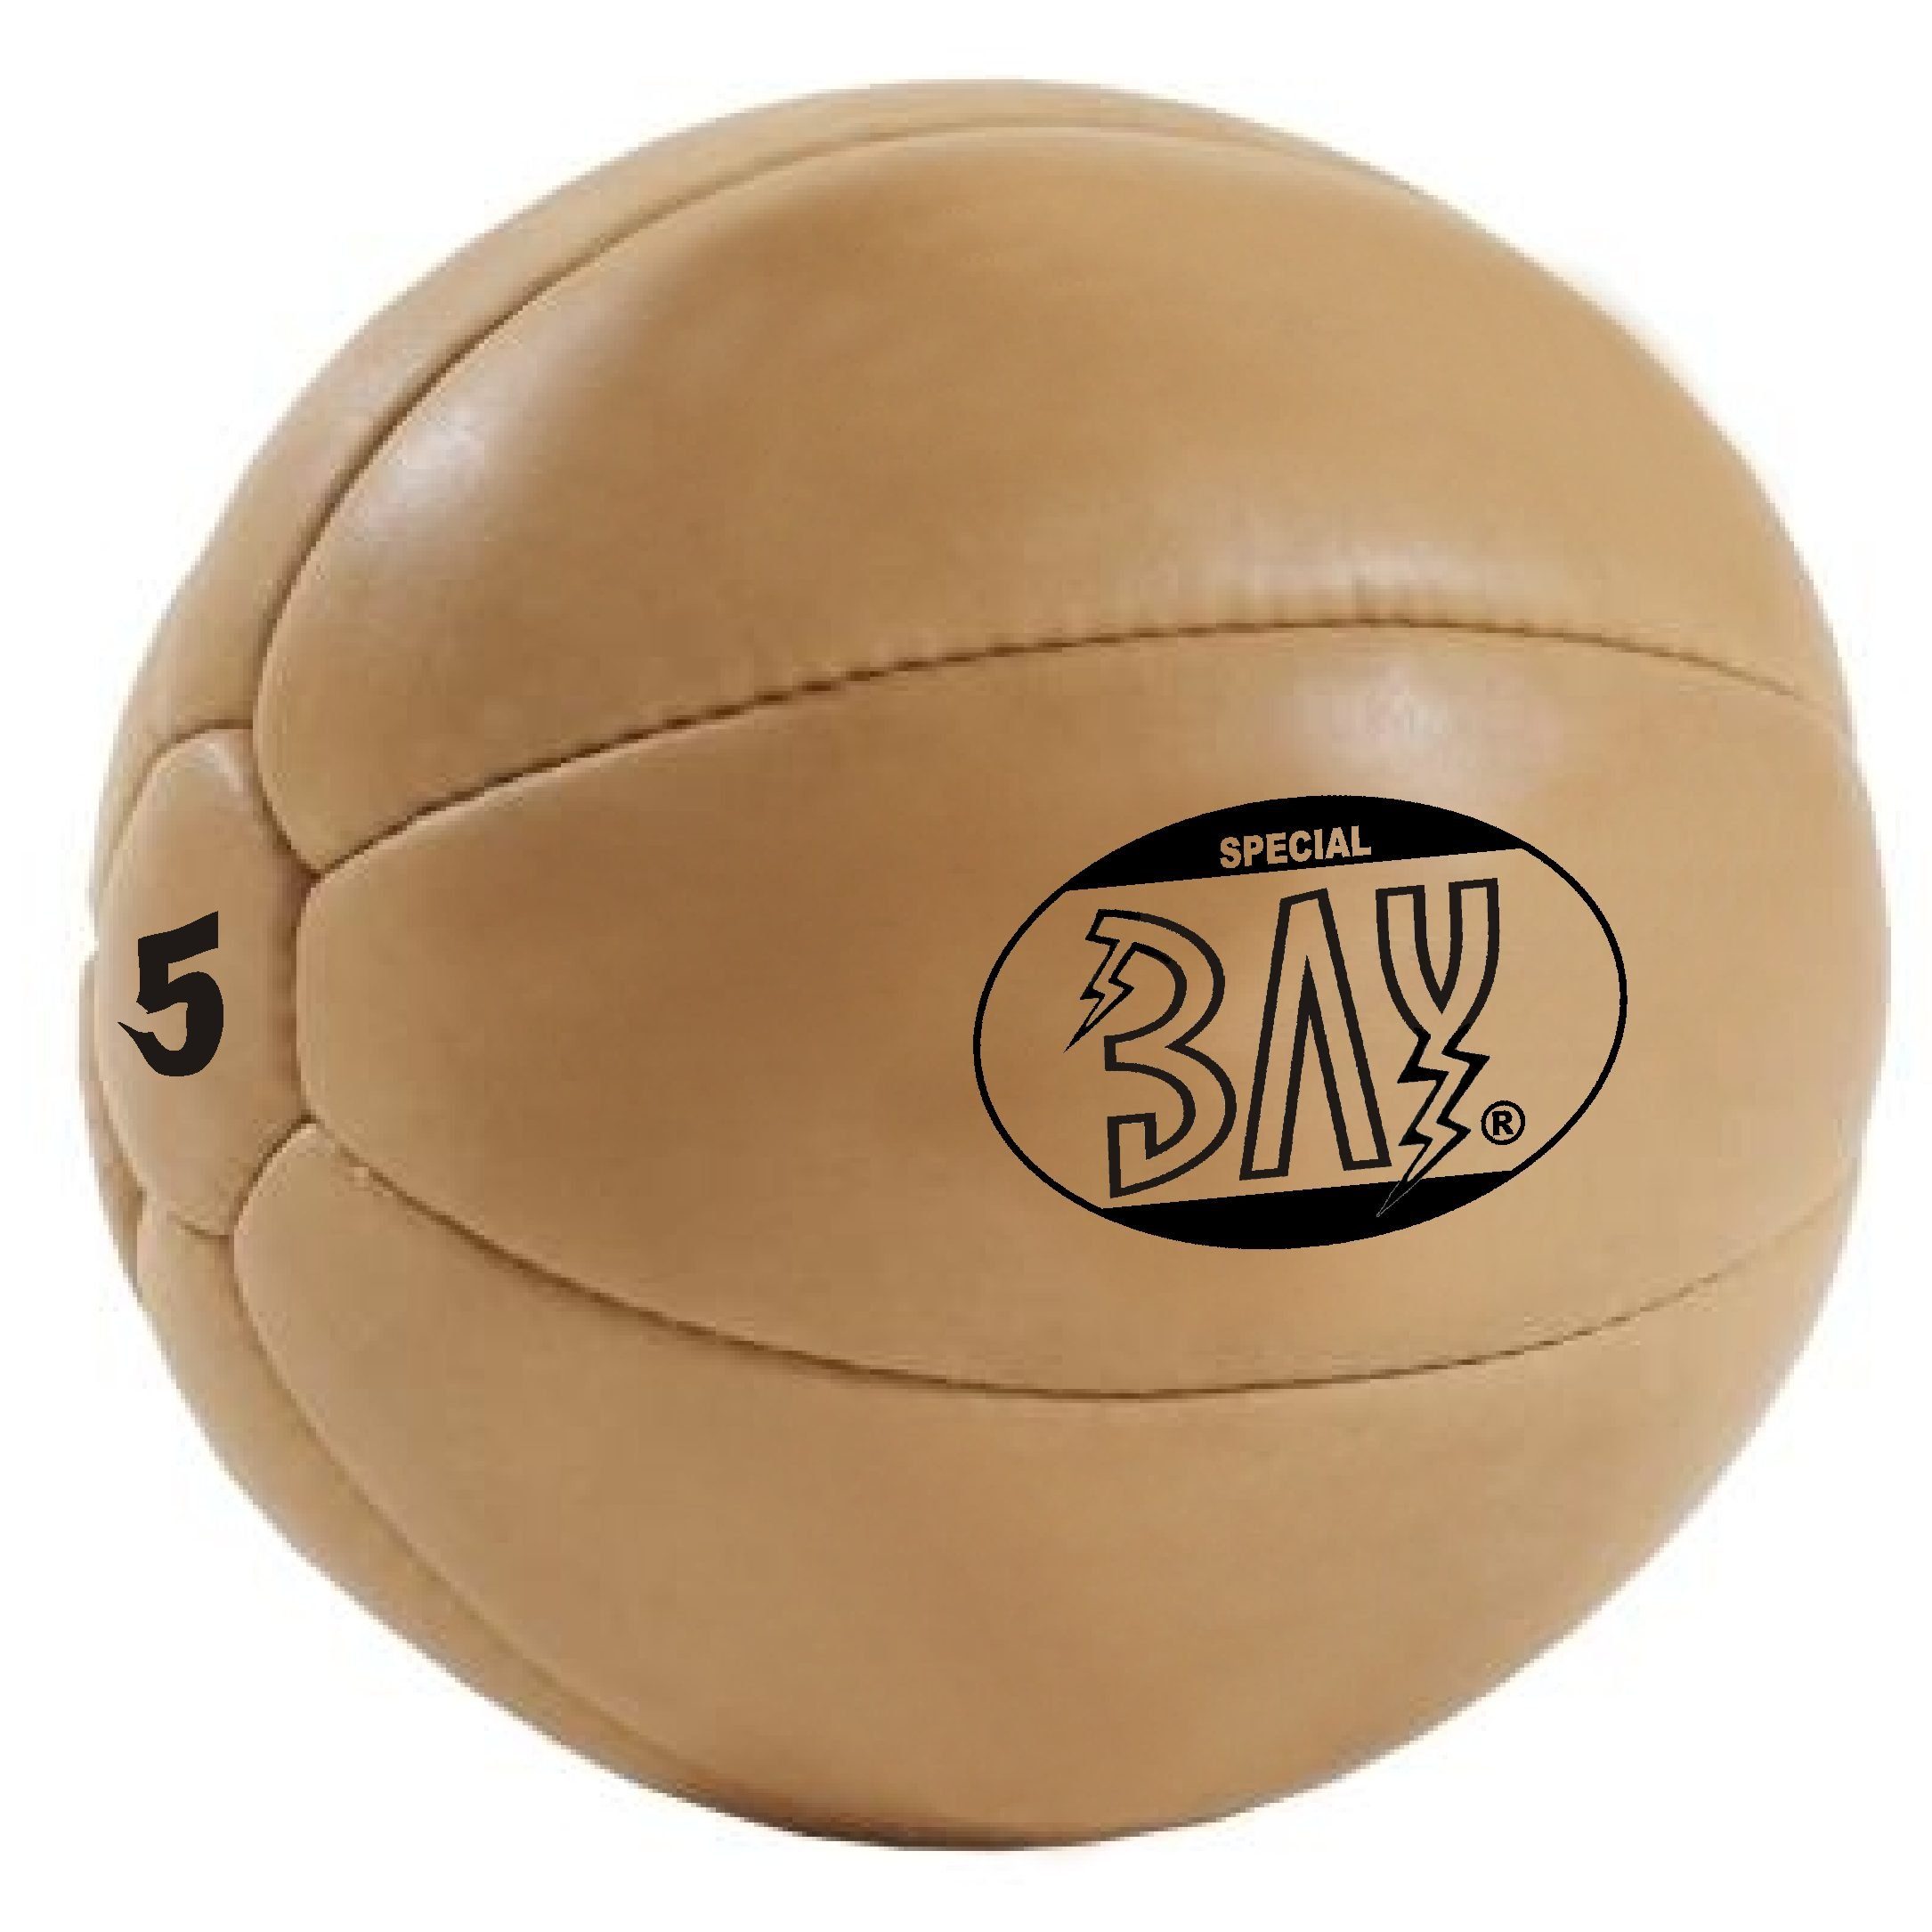 BAY-Sports Medizinball Ausführung Kraftball, Vollball Trainingsball natur braun 5kg kg Profi Fitnessball Kunstleder Kraftsport klassische 5